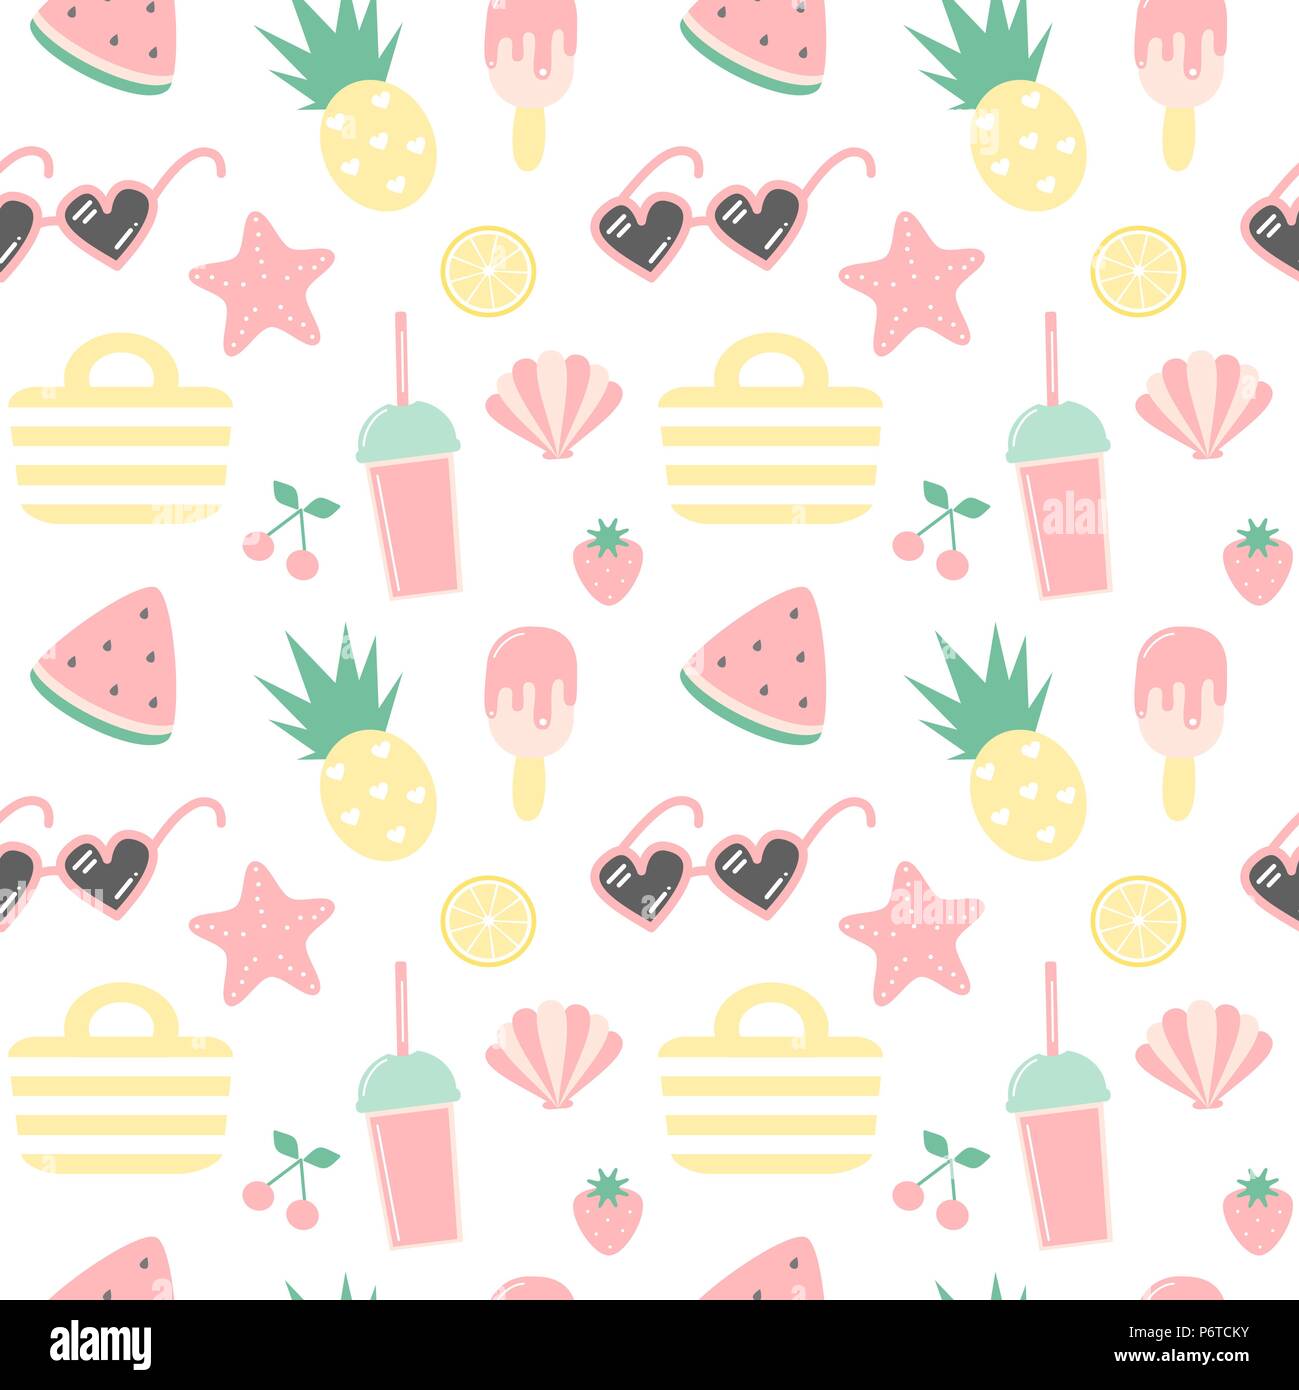 https://c8.alamy.com/comp/P6TCKY/cute-colorful-summer-seamless-vector-pattern-background-illustration-P6TCKY.jpg